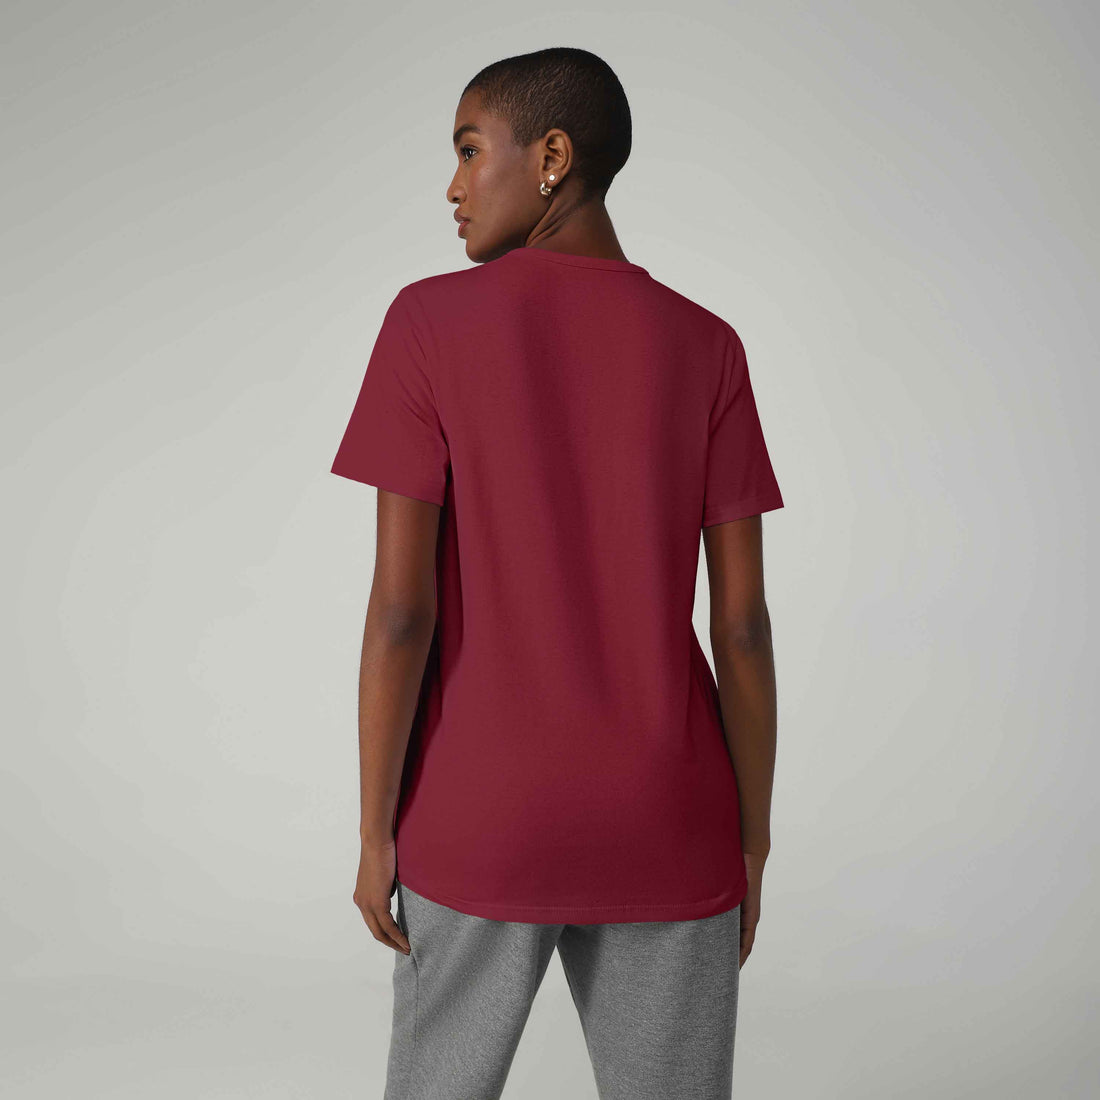 Tech T-Shirt Impermeável Feminina - Vermelho Escarlate